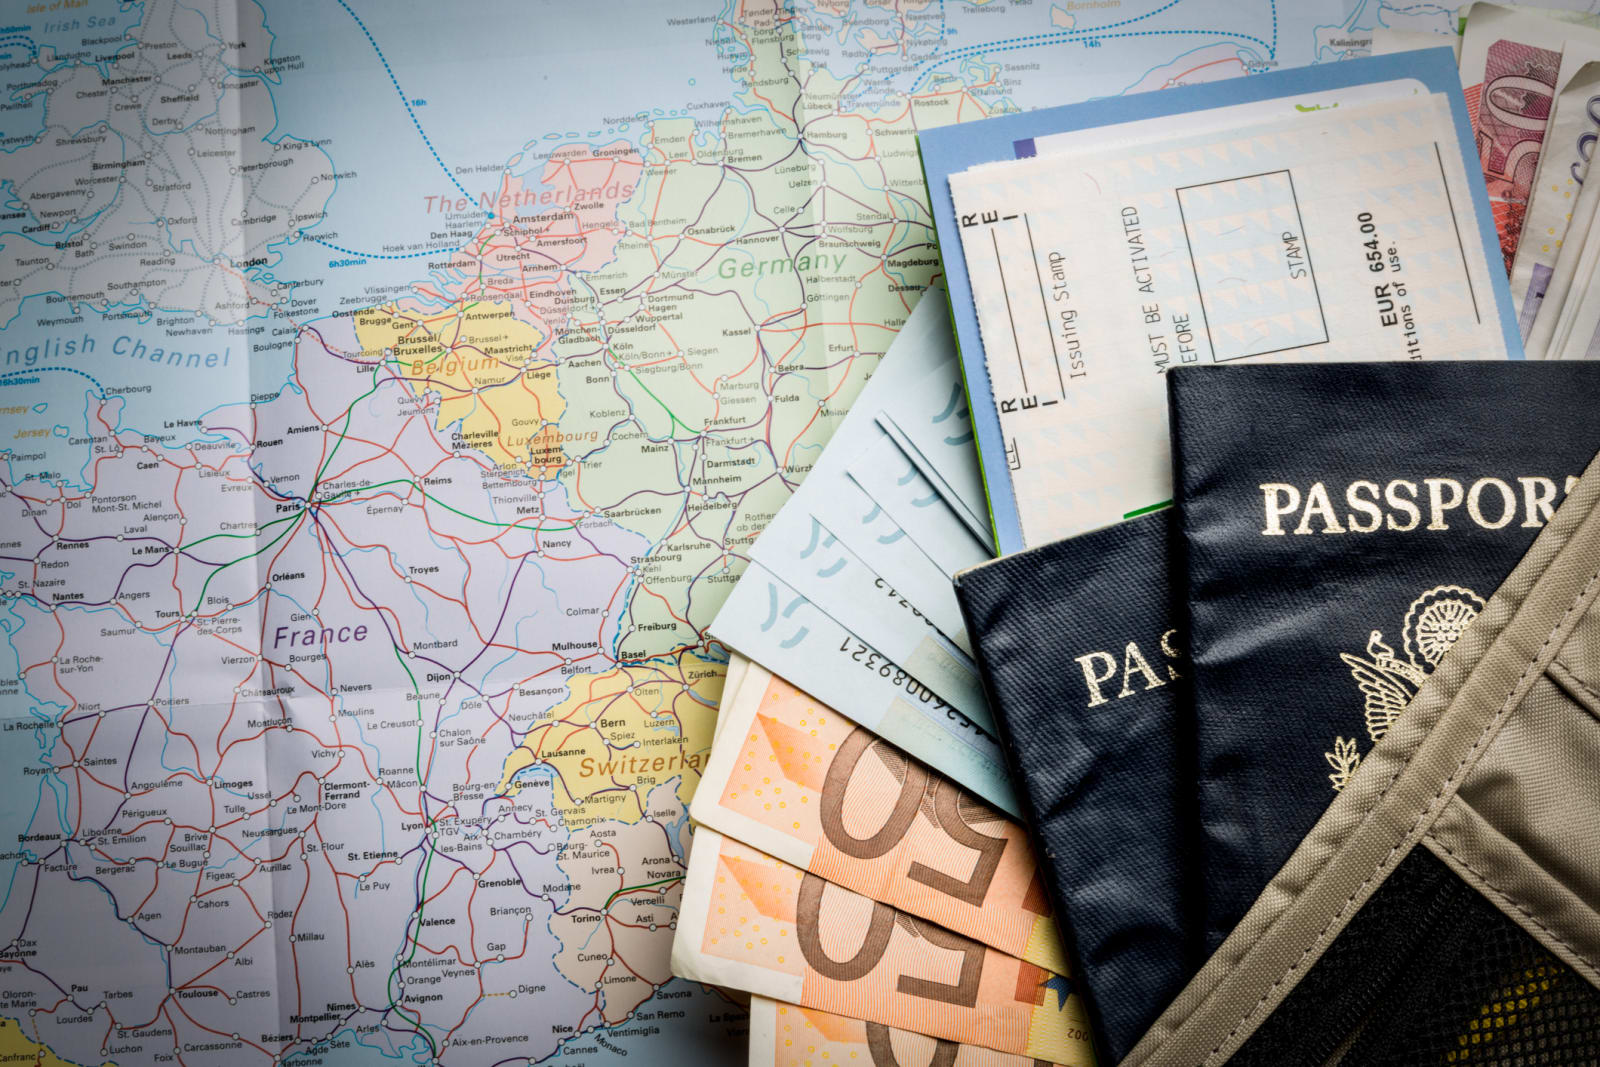 Passports and map